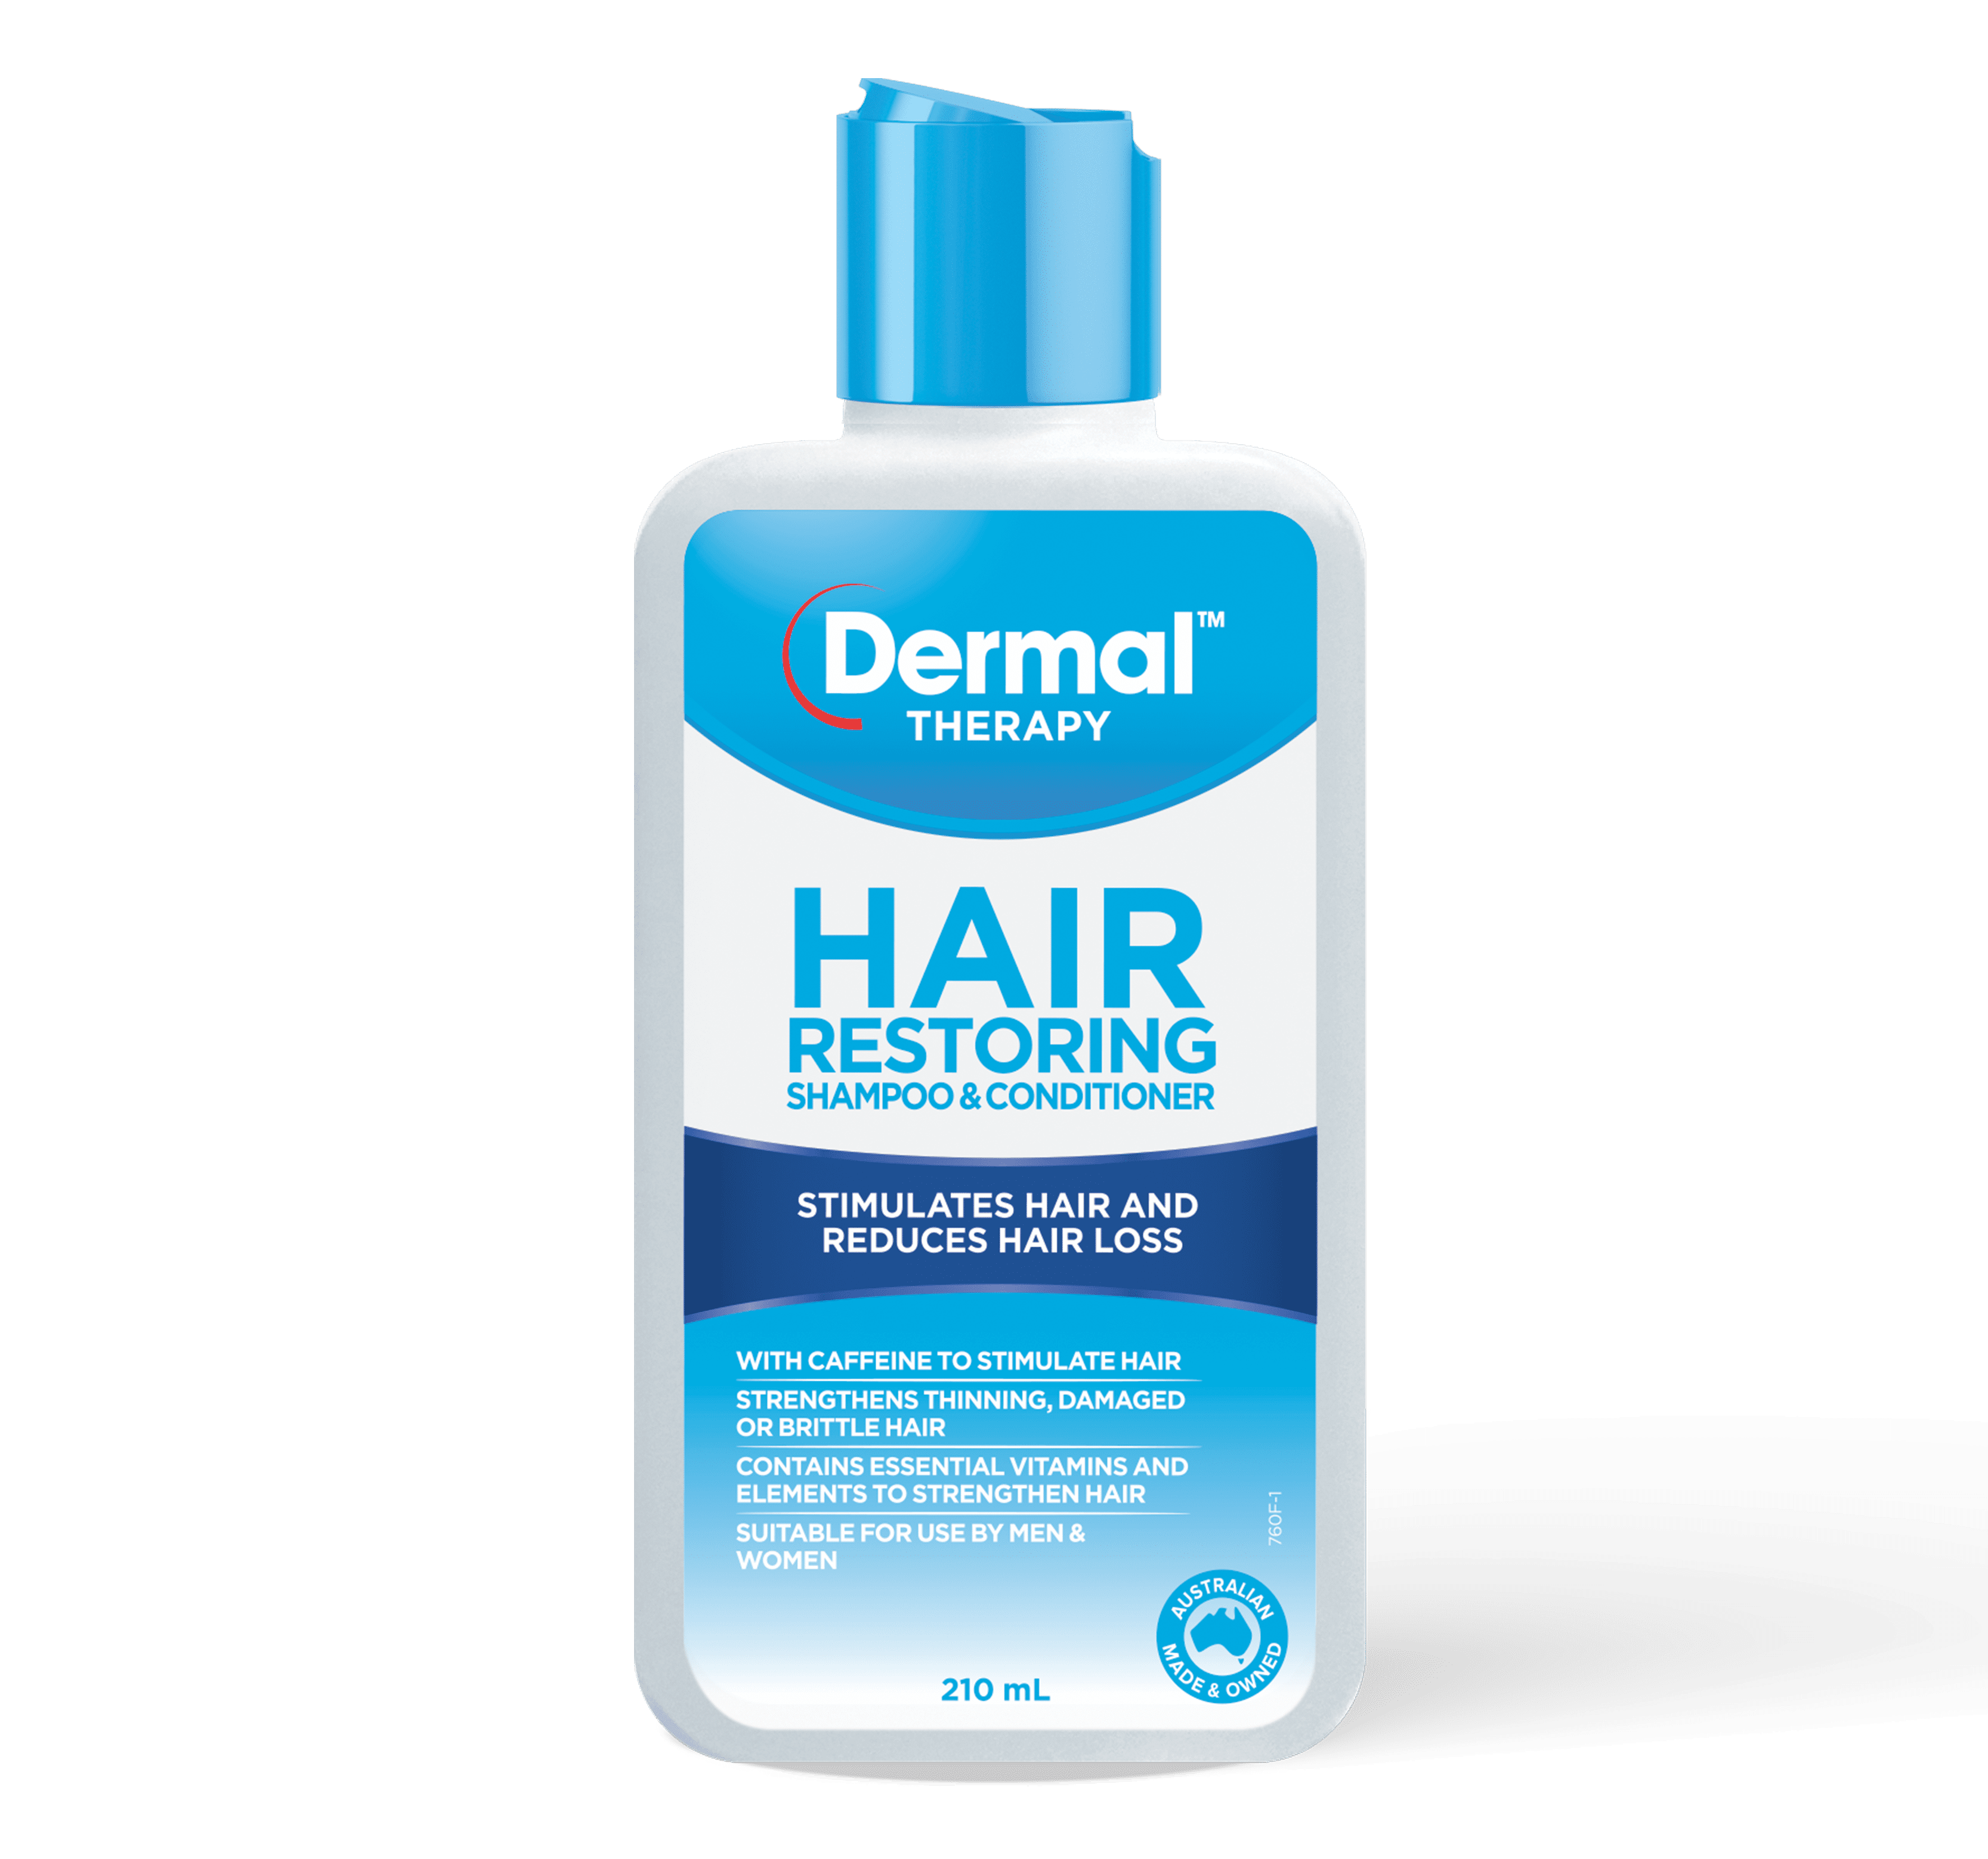 Hair regrowth | Restoring Hair Shampoo & Conditioner | Dermal Therapy